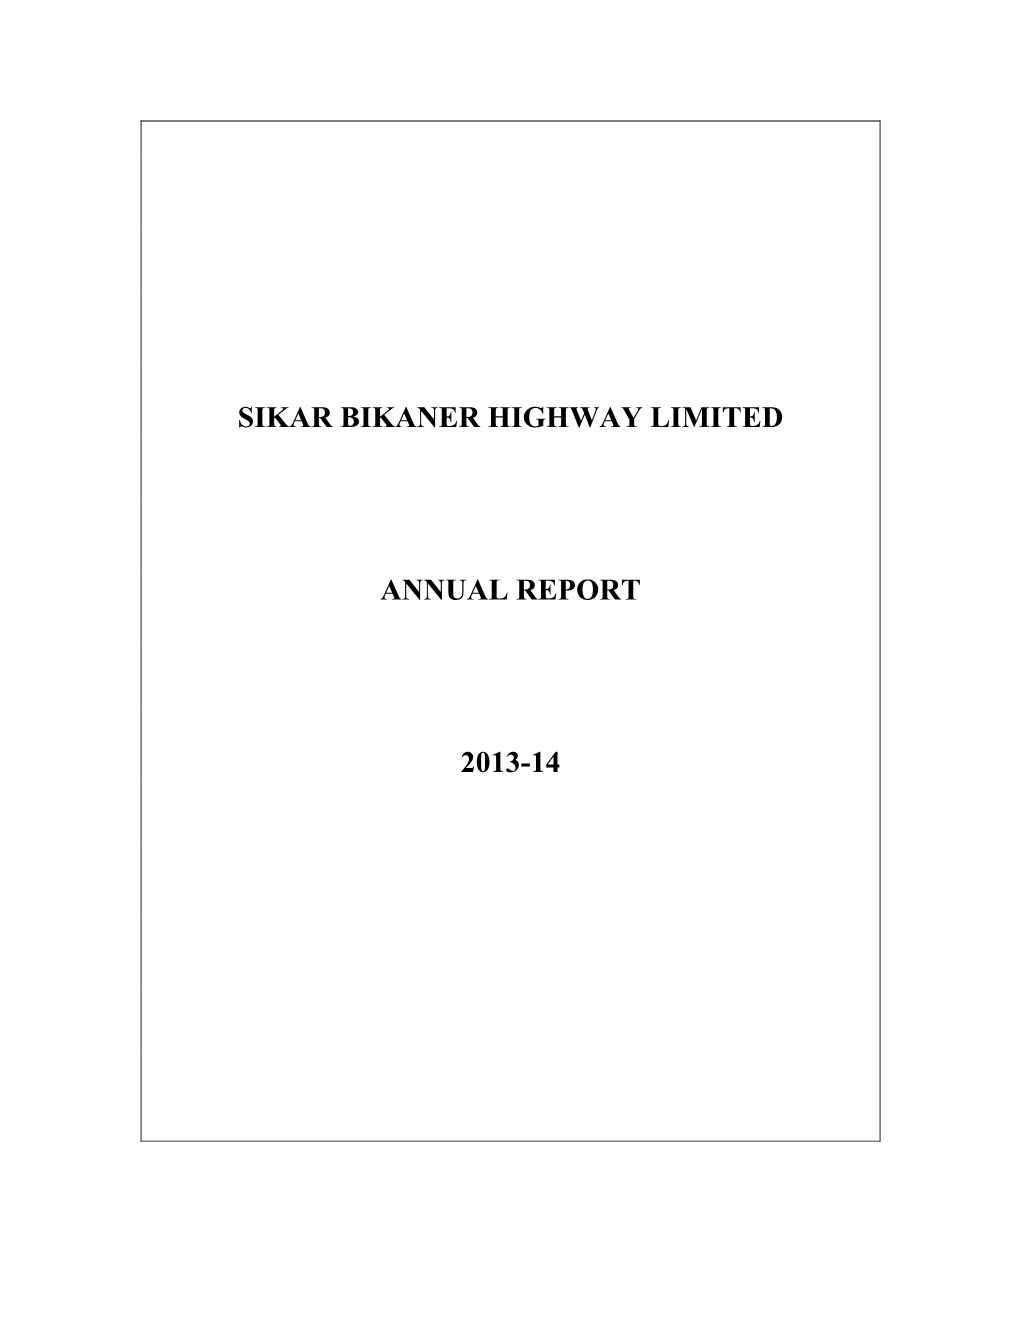 Sikar Bikaner Highway Limited Annual Report 2013-14